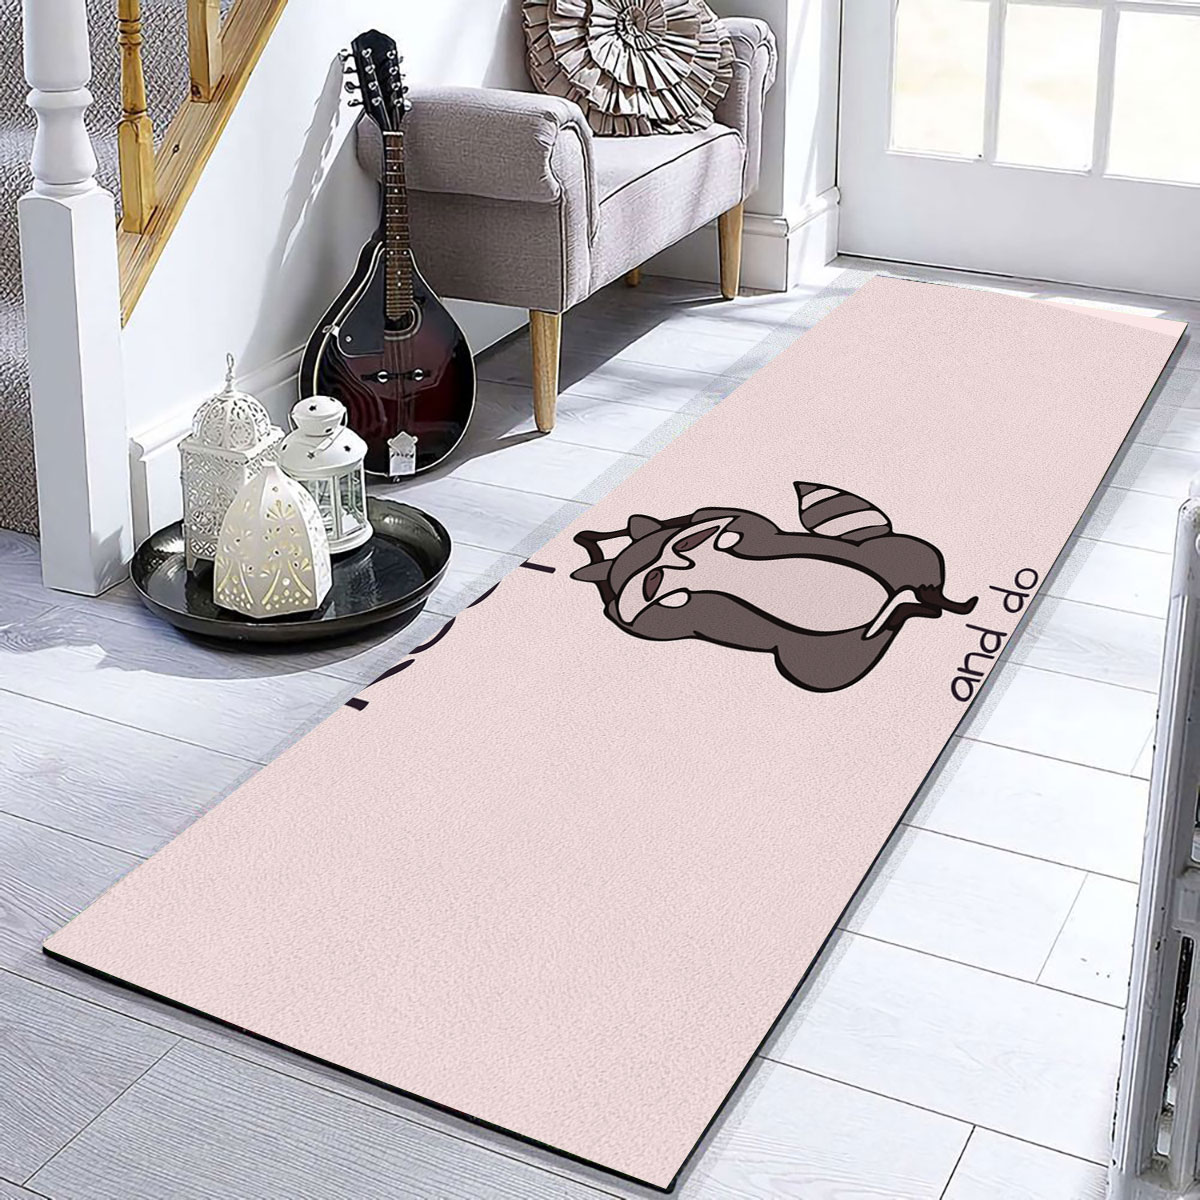 Calm And Yoga Raccoon Runner Carpet